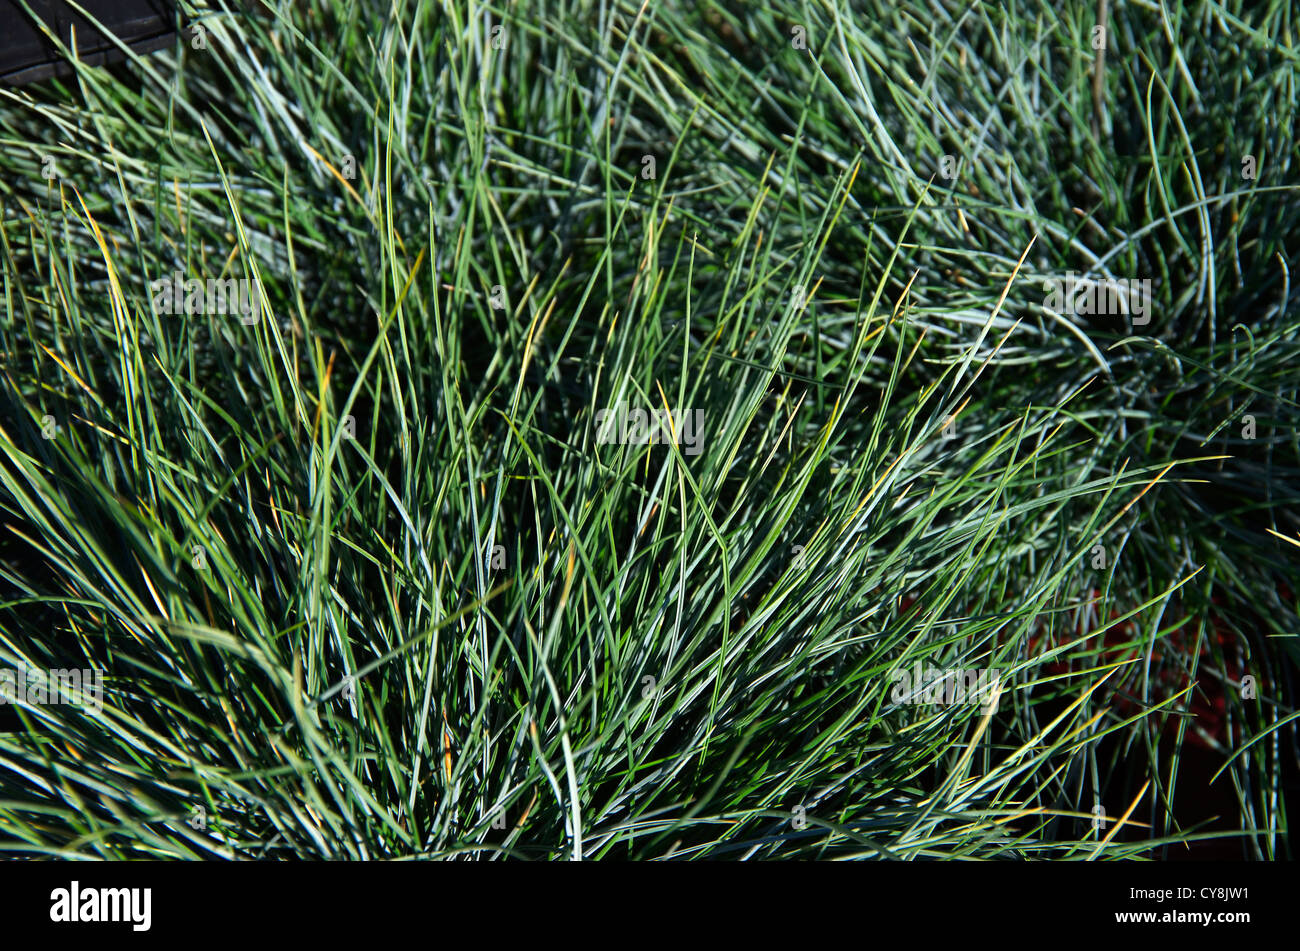 Festuca grass plants Stock Photo